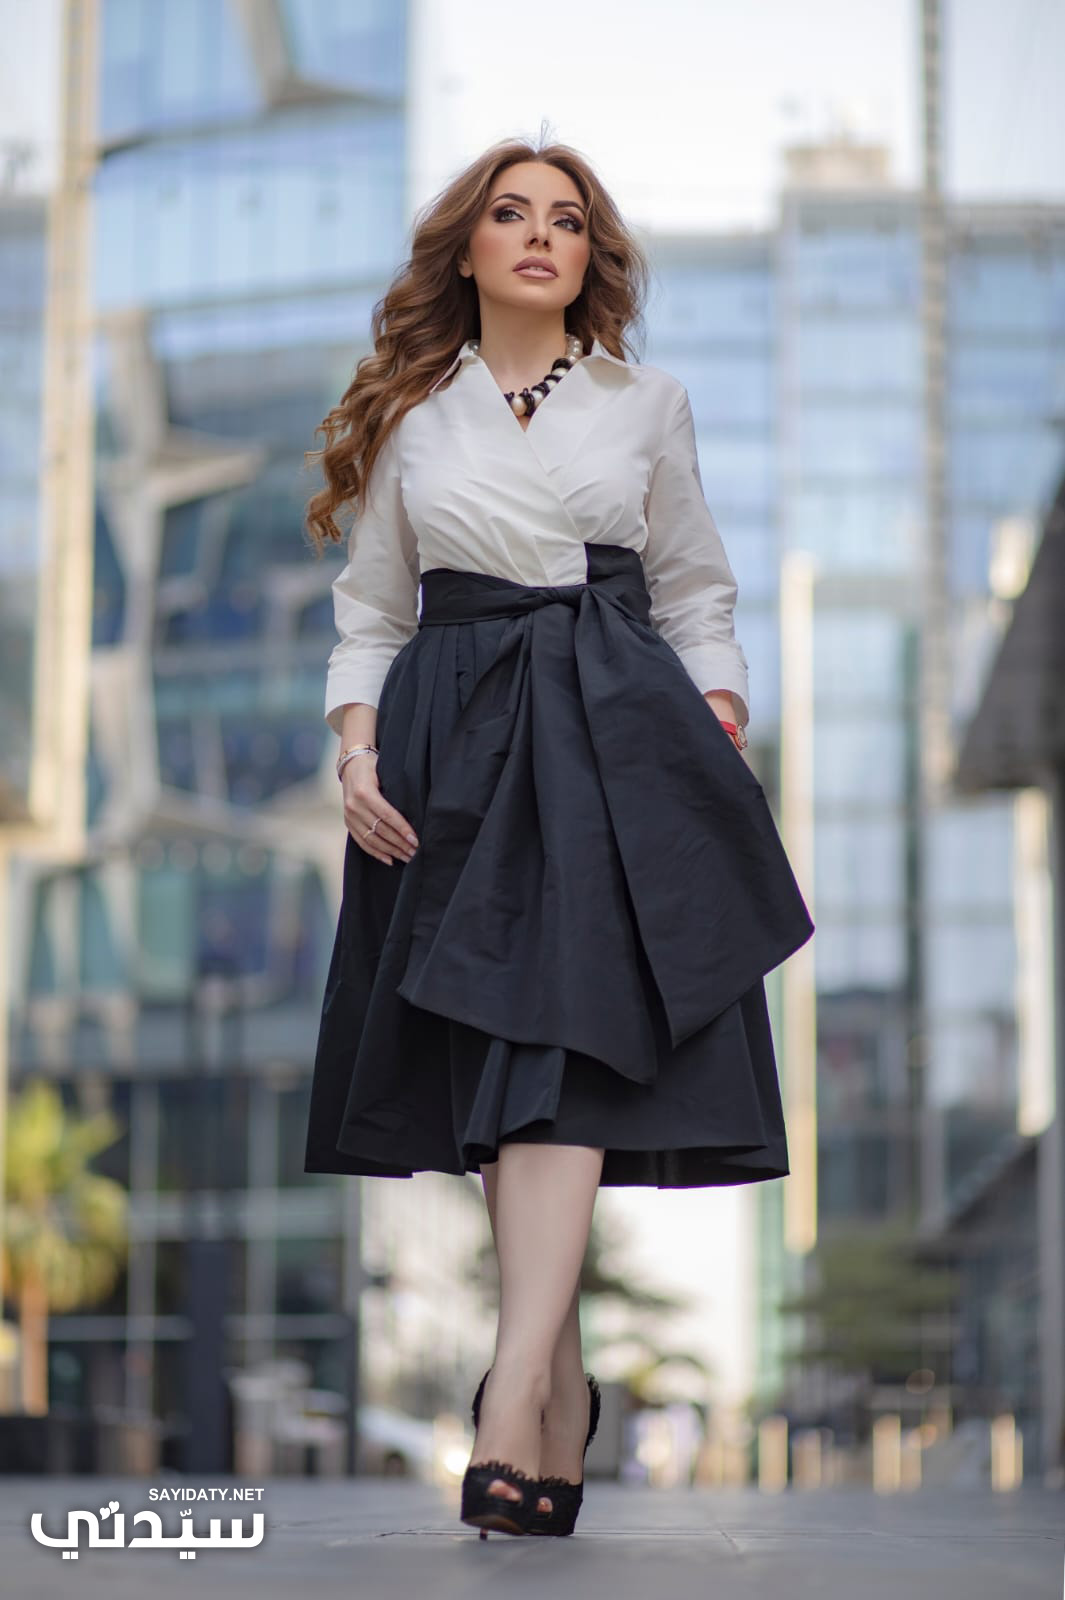 Saudi businesswoman and designer Mai Al-Rafaei